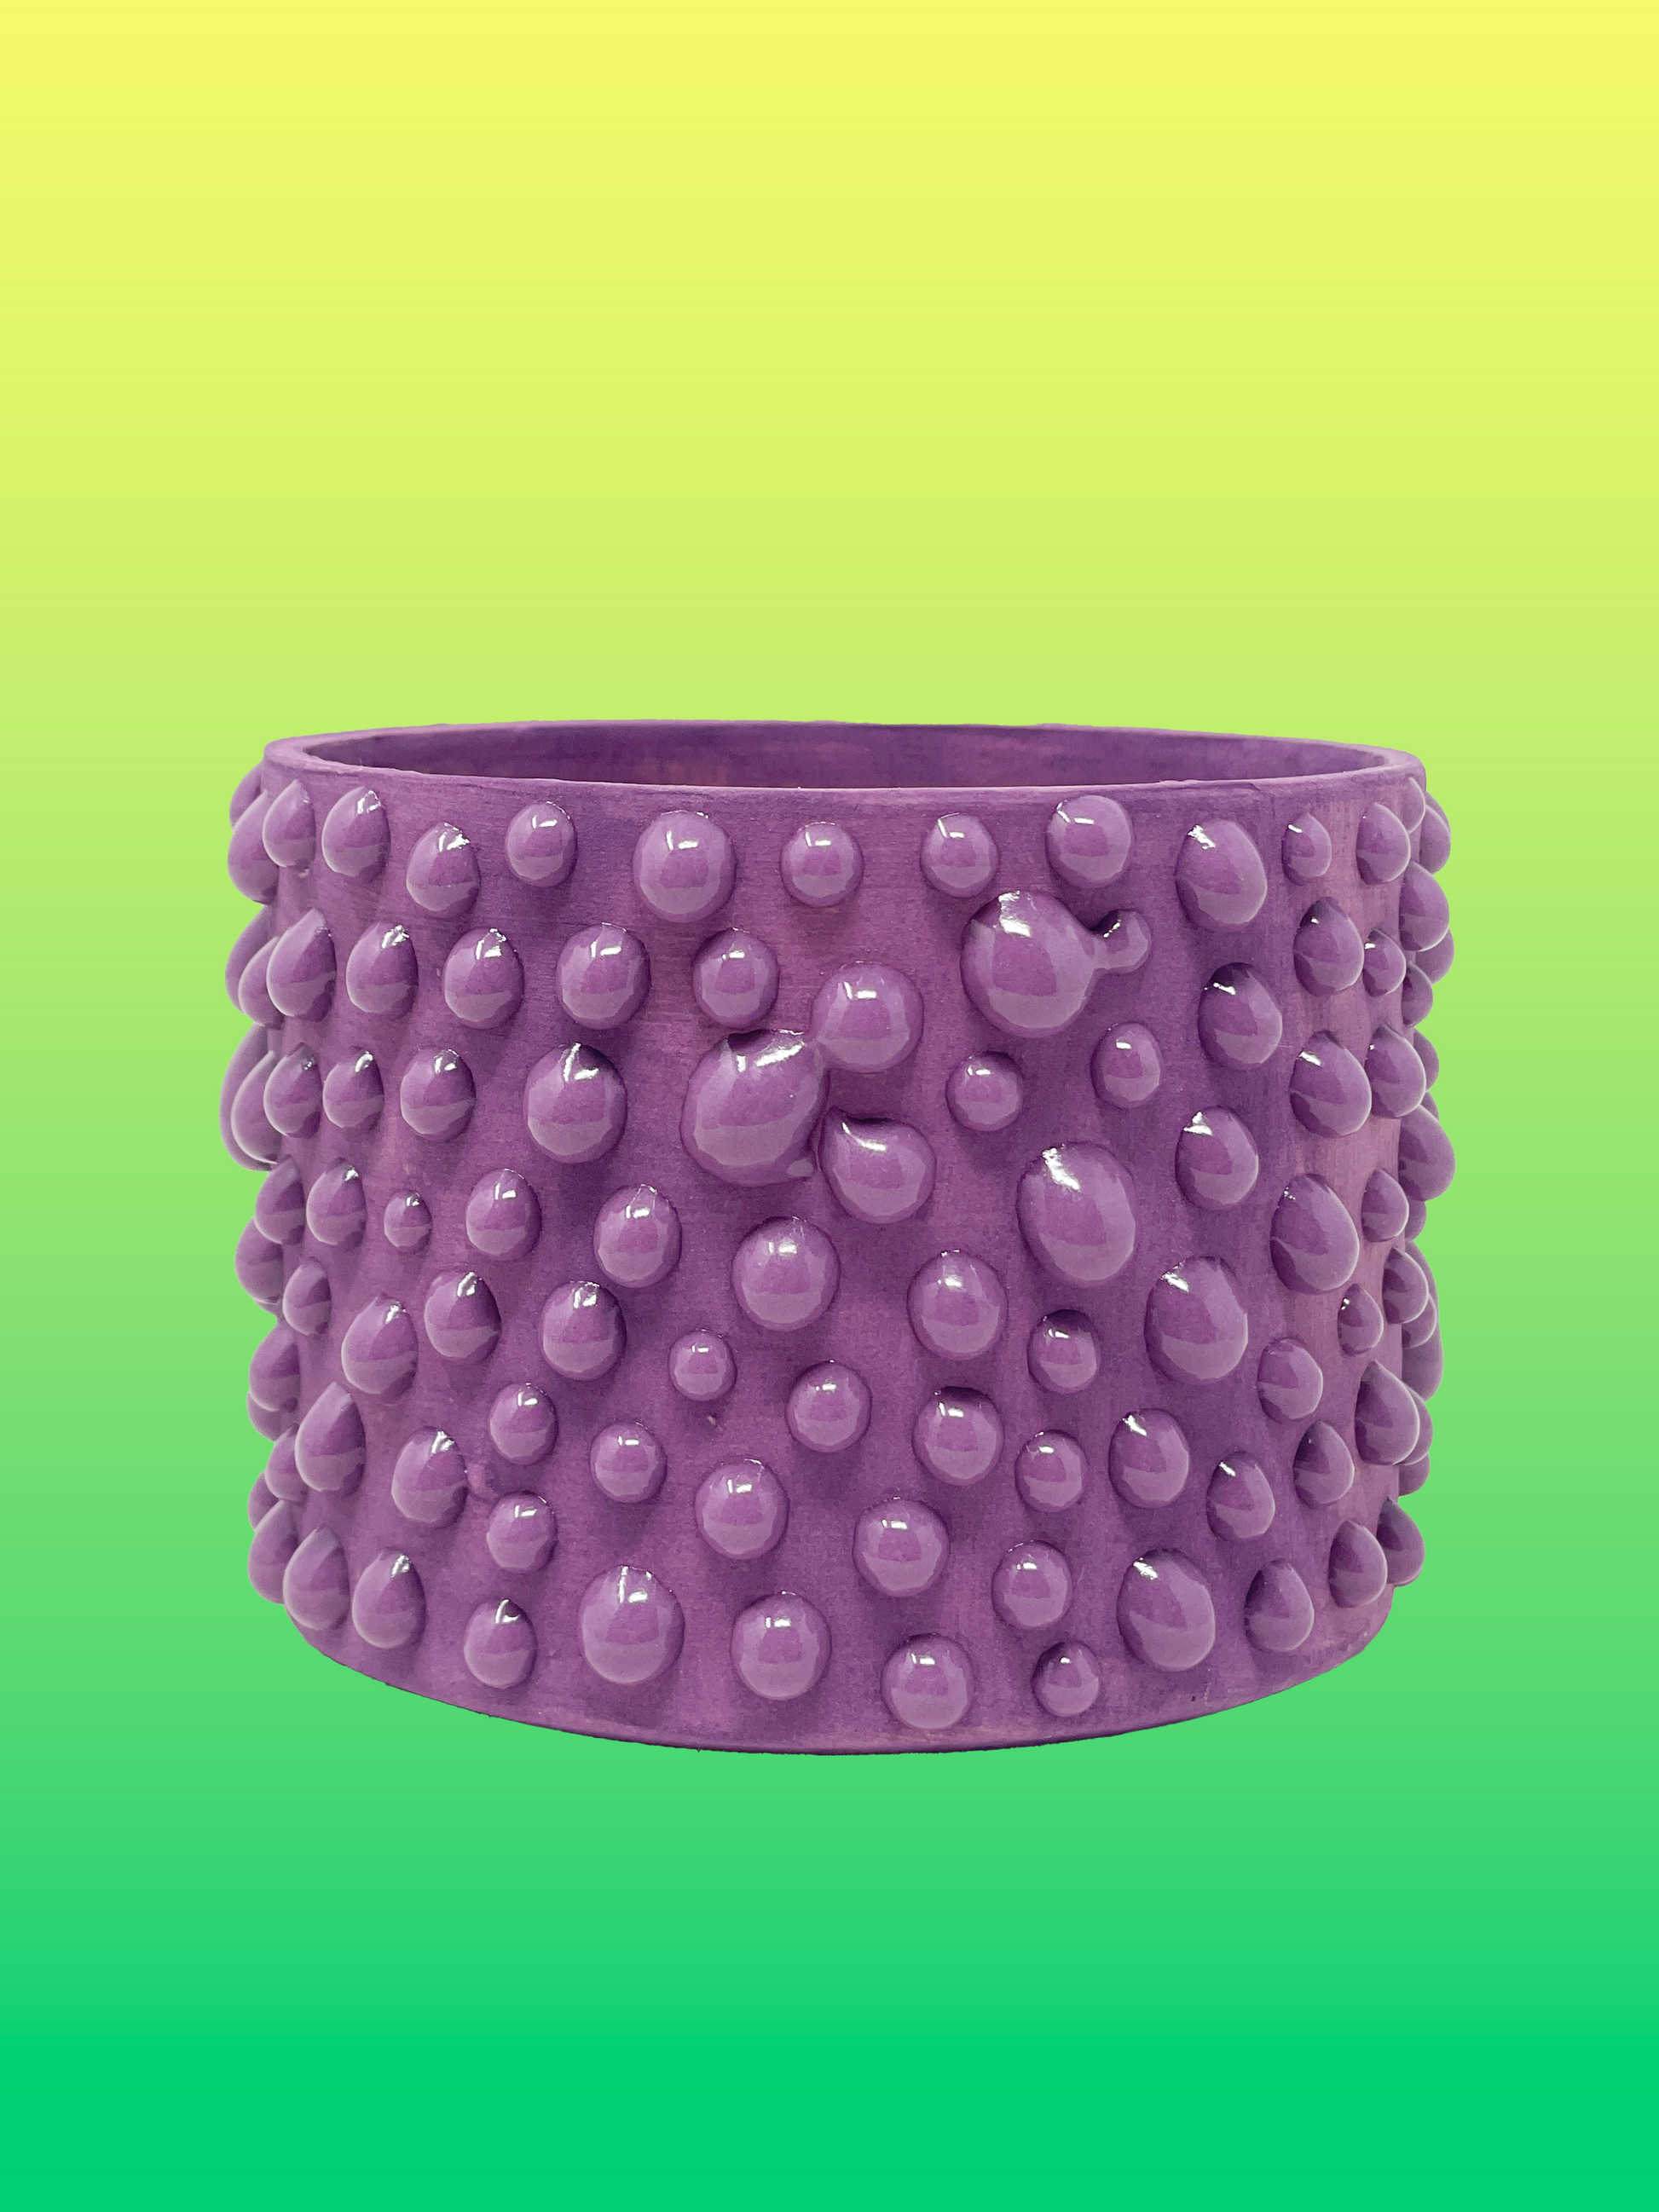 pottery glaze goop gloop purple